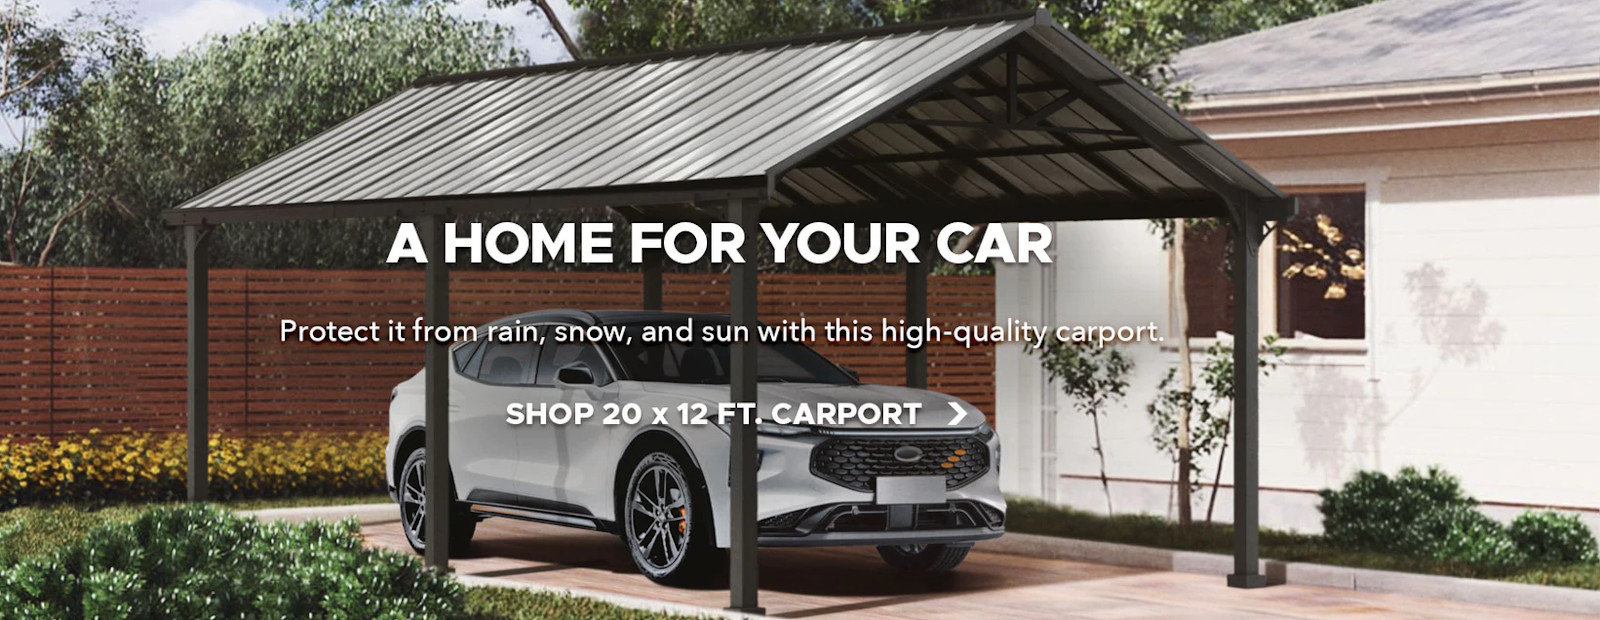 Low-priced carport